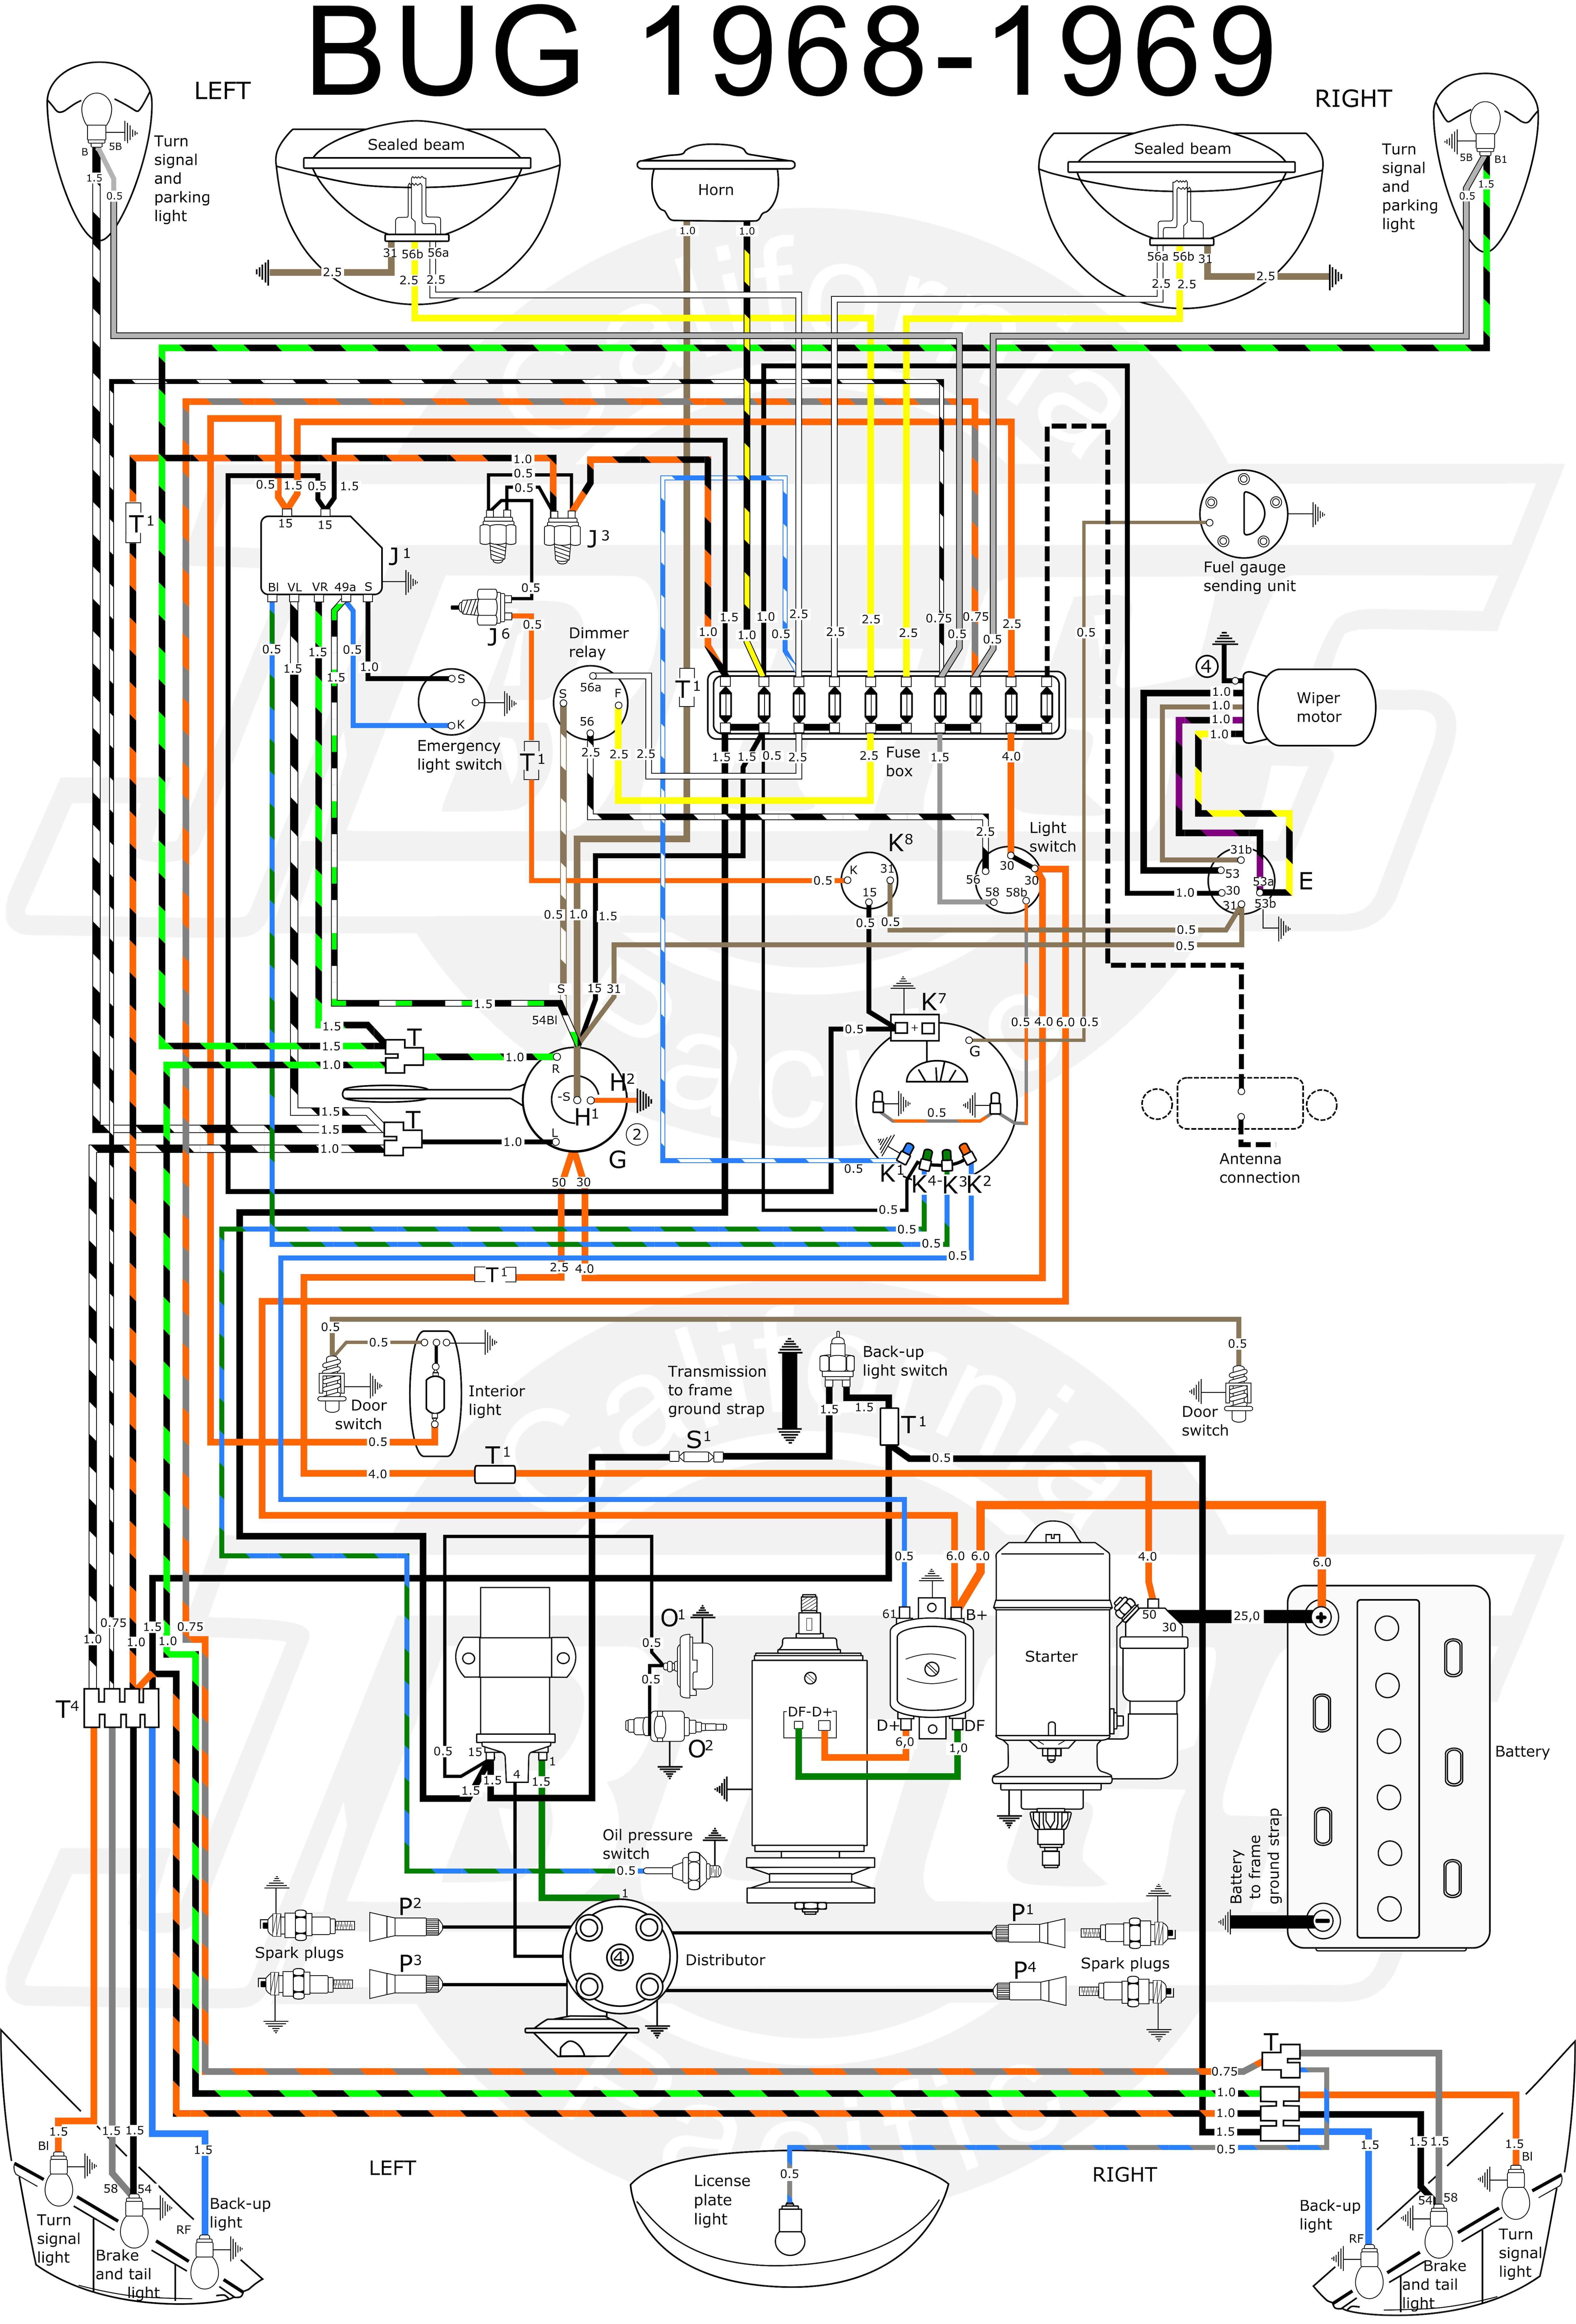 Vw Tech Article 1968-69 Wiring Diagram - Vw Wiring Diagram